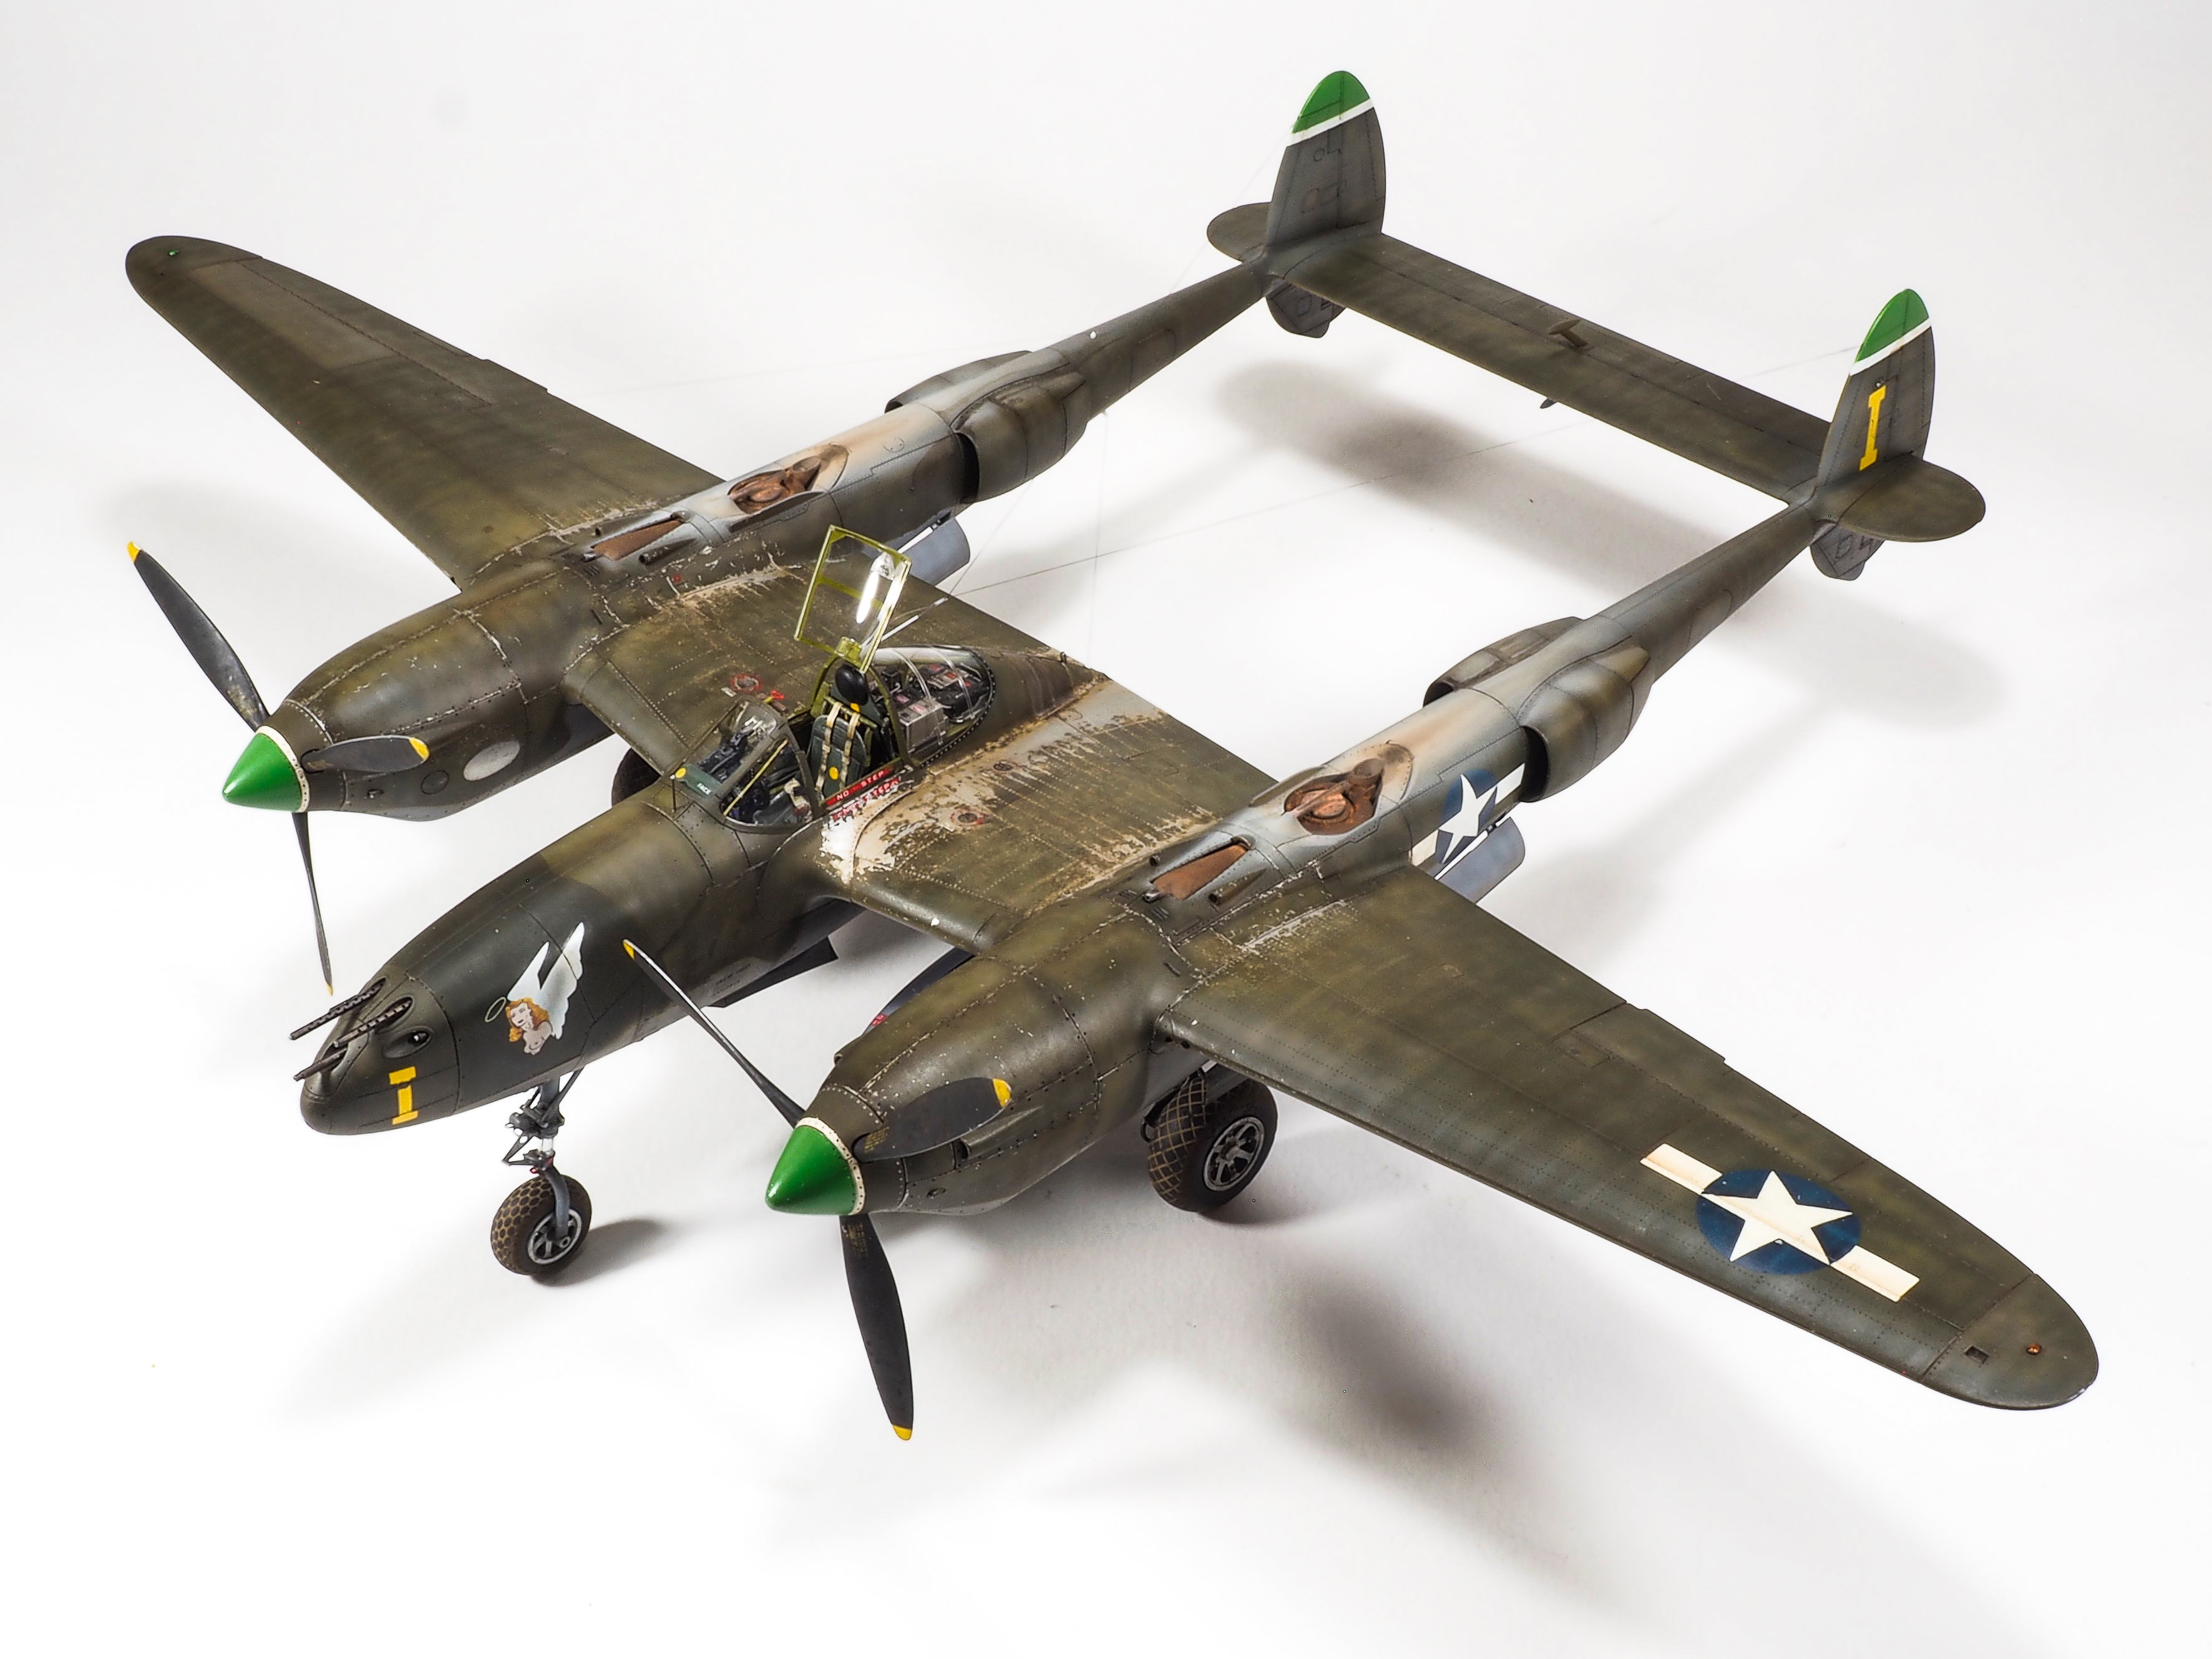 Tamiya 61120 1/48 P-38F Lightning Build Review